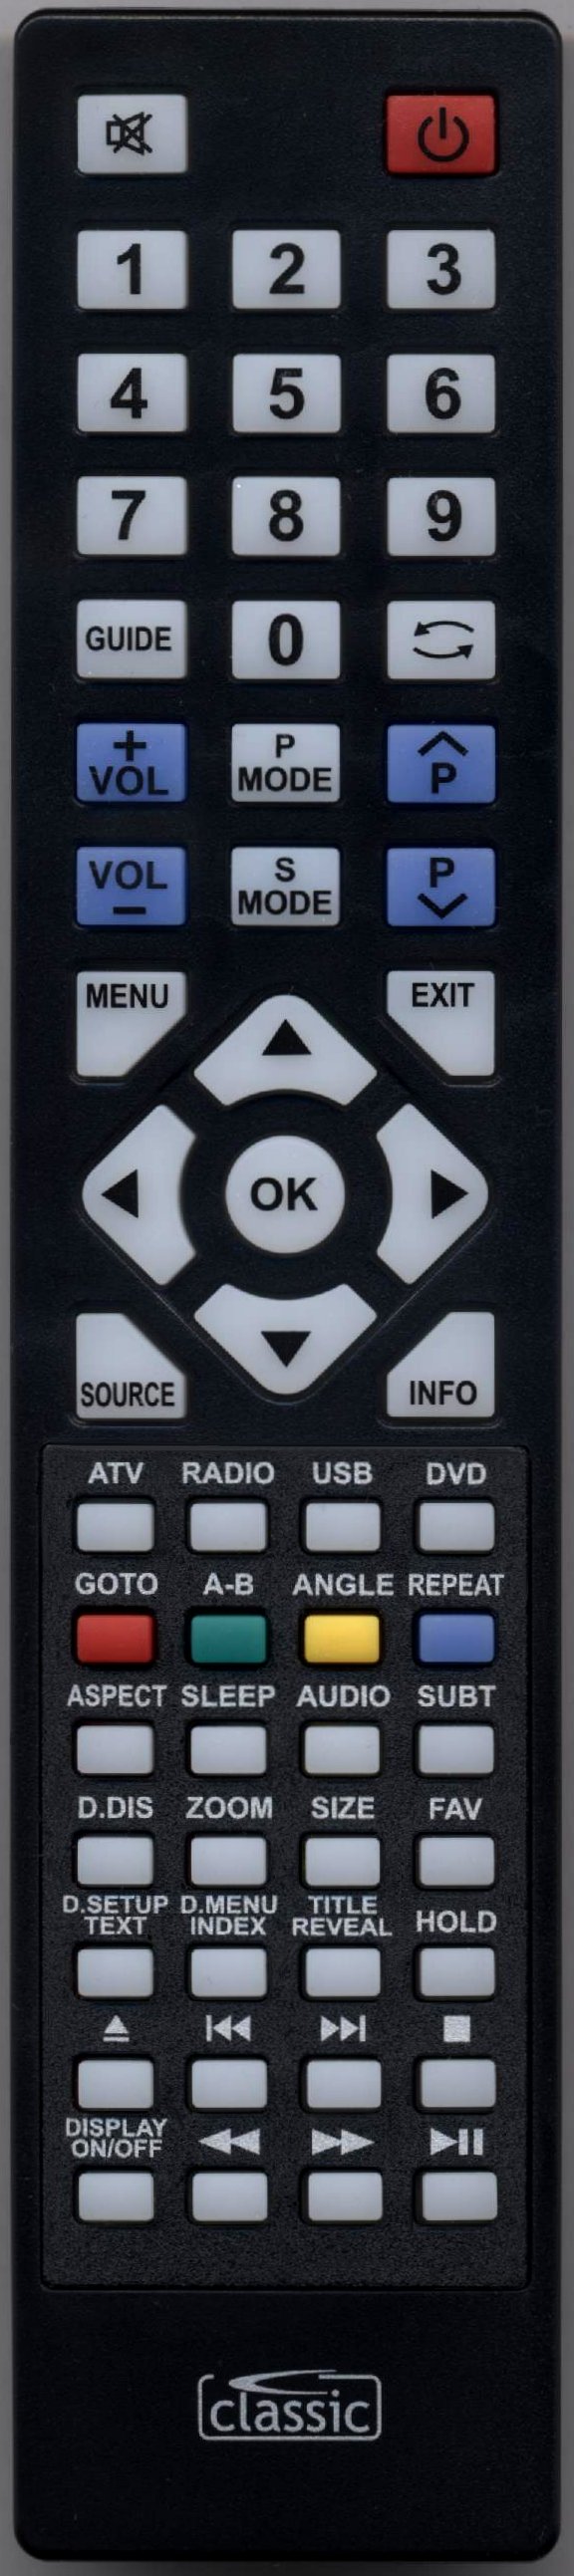 UMC X216/28G-GB-TCDU-UK Remote Control Alternative 